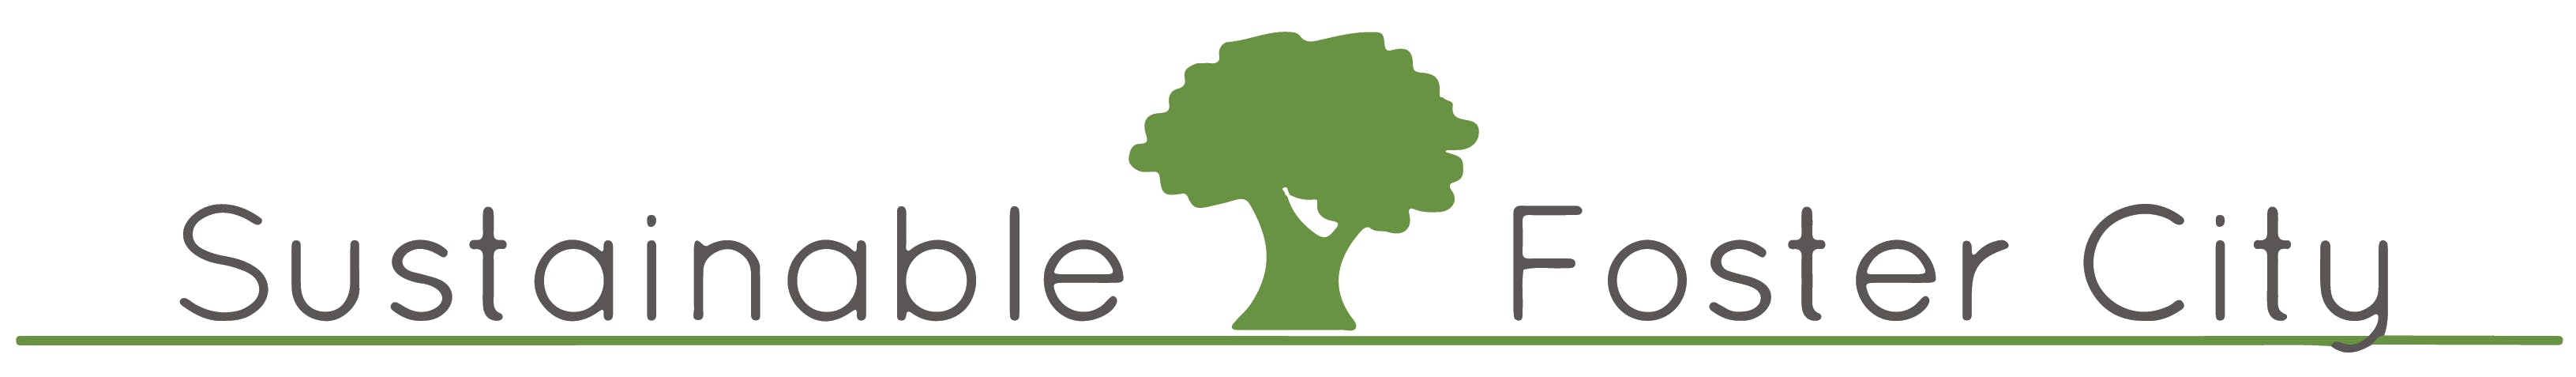 Sustainable Foster City Logo